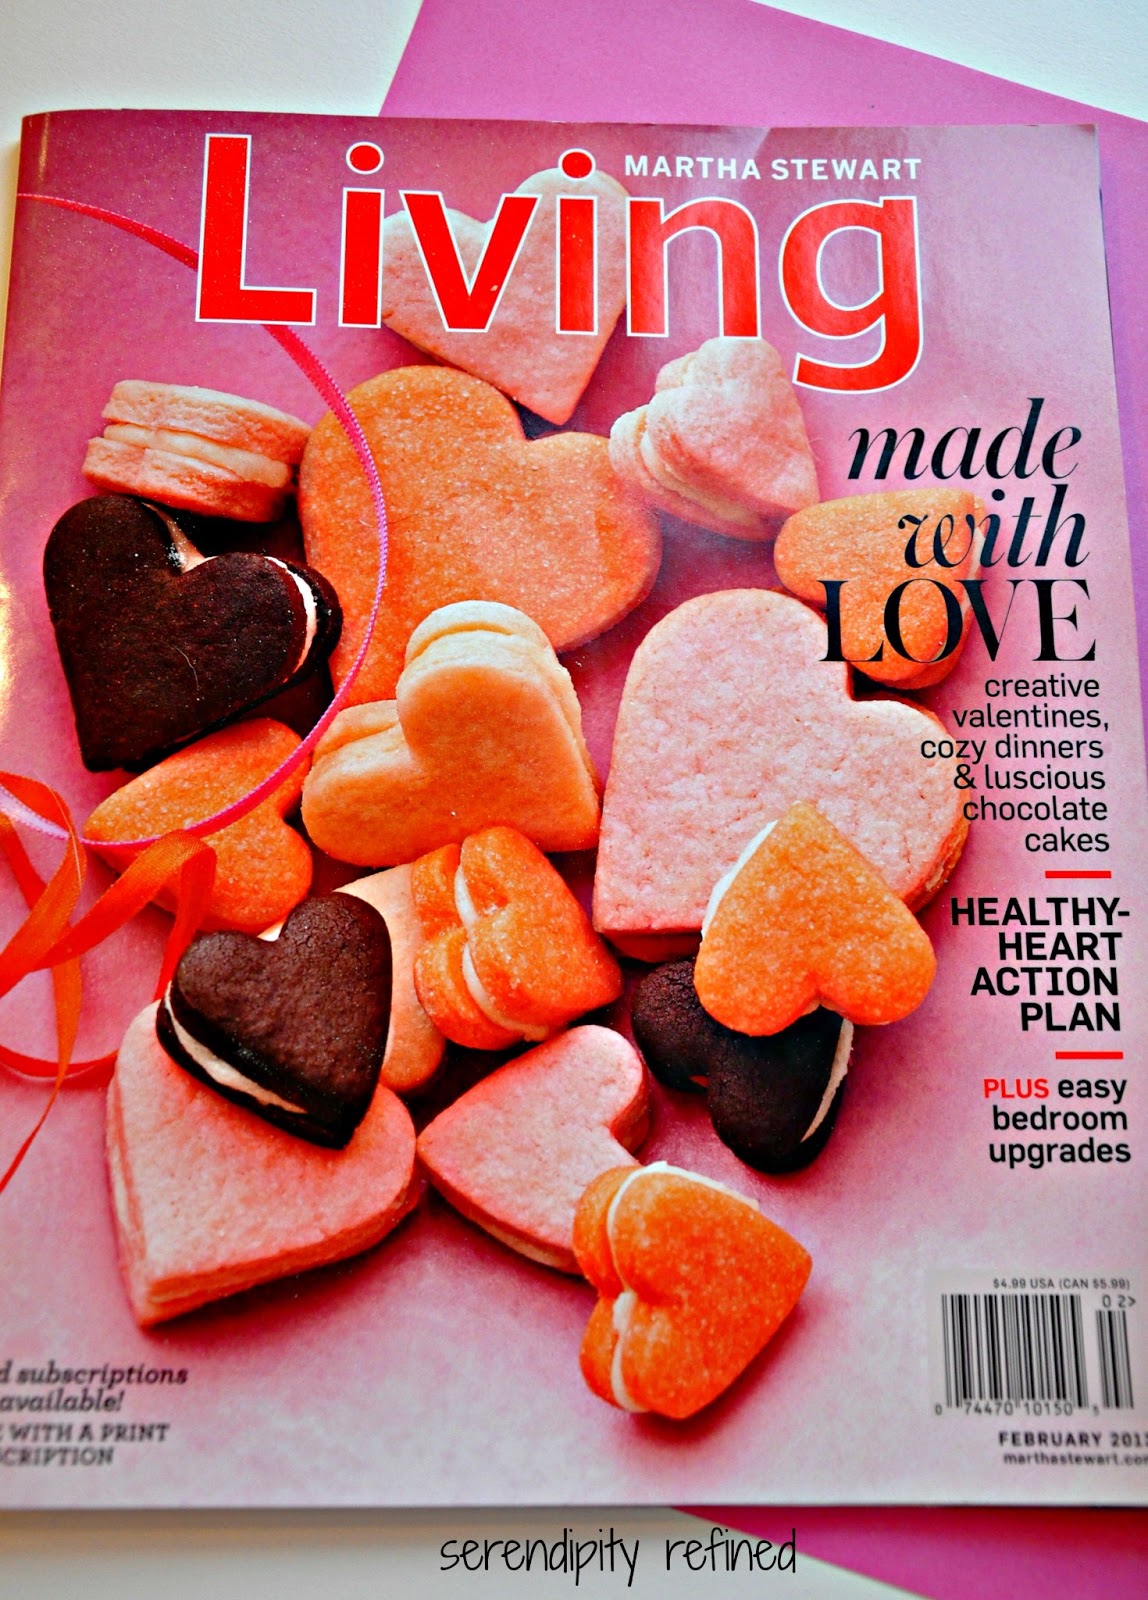 http://1.bp.blogspot.com/-mCBlWvzDD54/UQW5FQBbqwI/AAAAAAAAHE0/t_7BcHtMlZ0/s1600/Martha+Stewart+knockoff+cover+Valentine%2527s+day+dessert+cookies+shortbread+hearts+bake+3.jpg